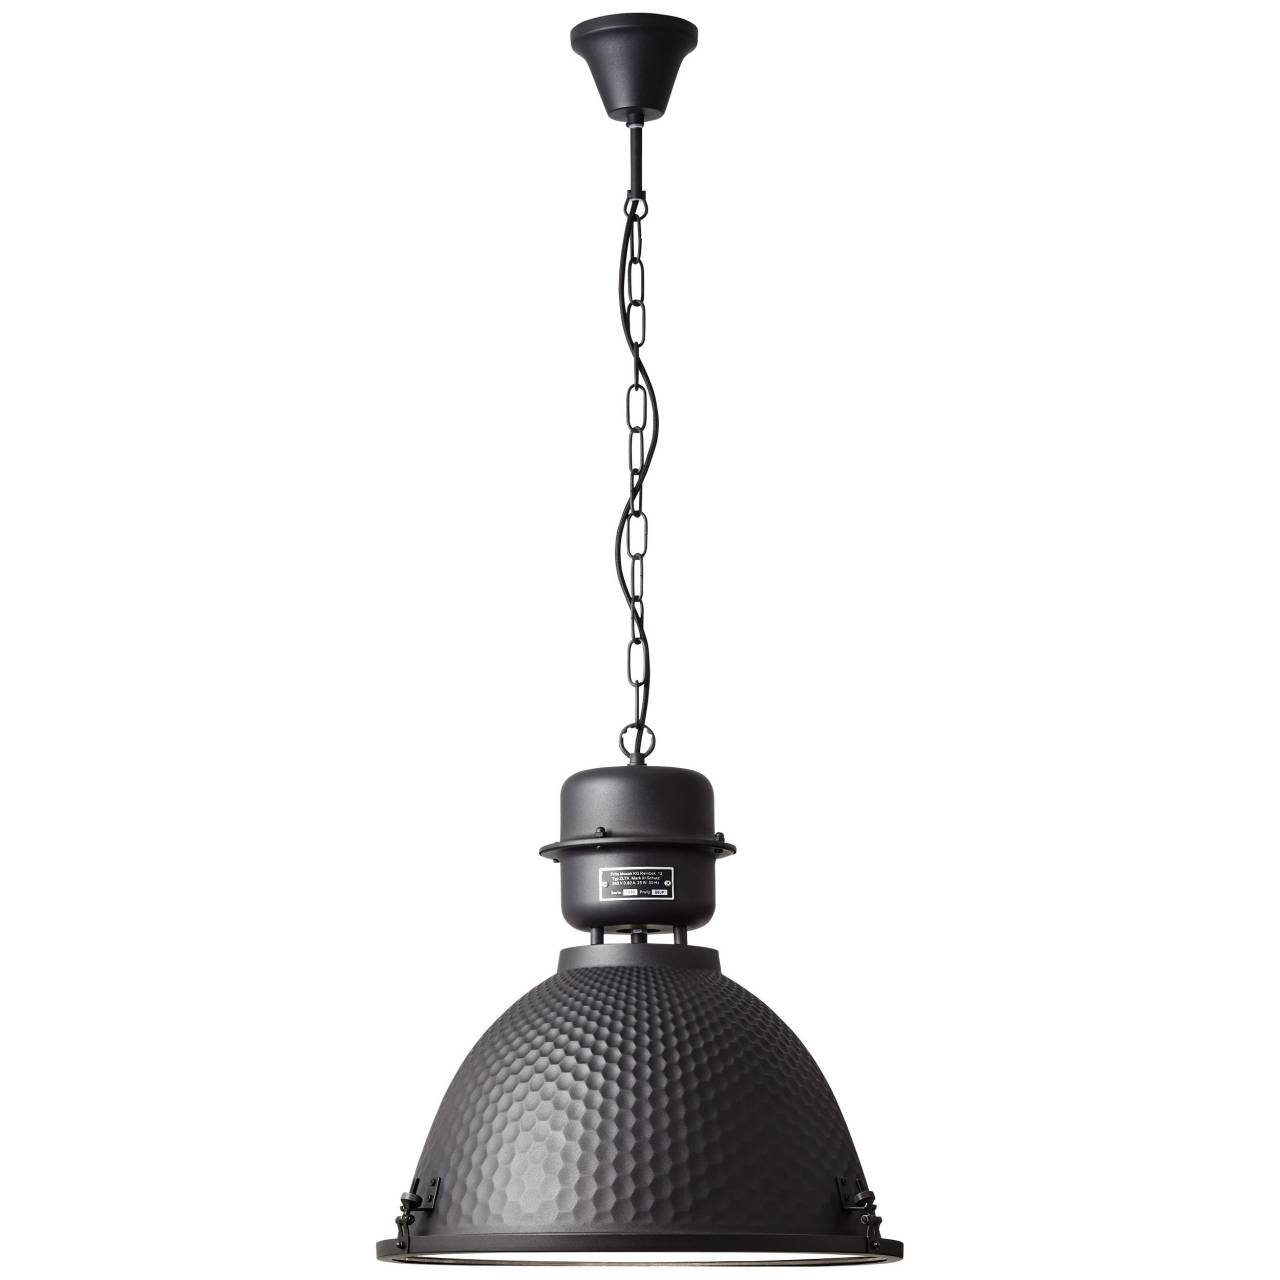 Brilliant Pendelleuchte E27, geeig Kiki, Pendelleuchte Kiki Lampe schwarz 1x A60, 48cm 60W, korund